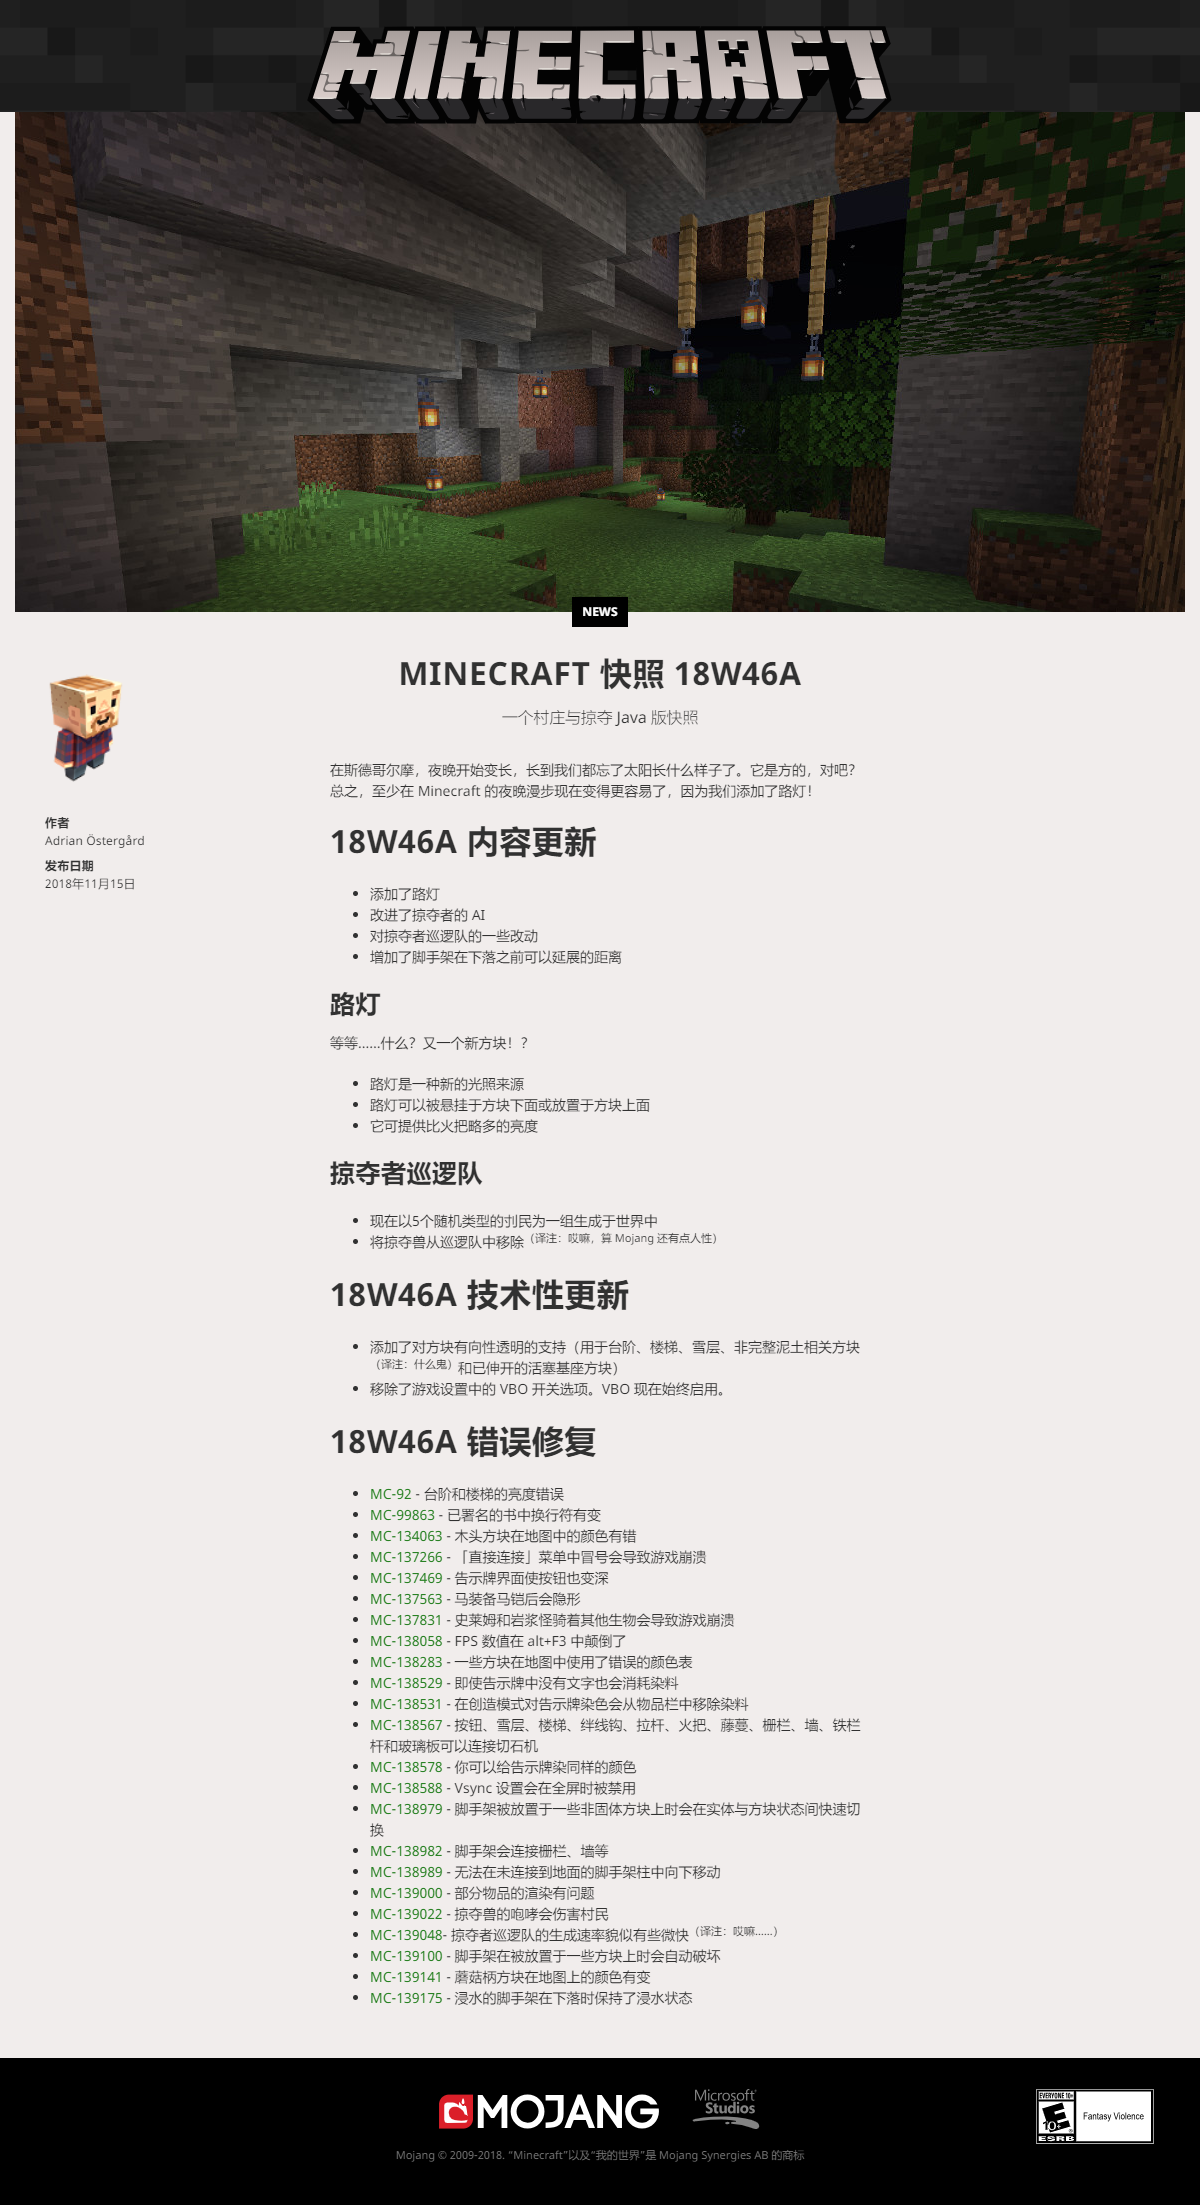 minecraft.net_zh-hans_article_minecraft-snapshot-18w46a.png